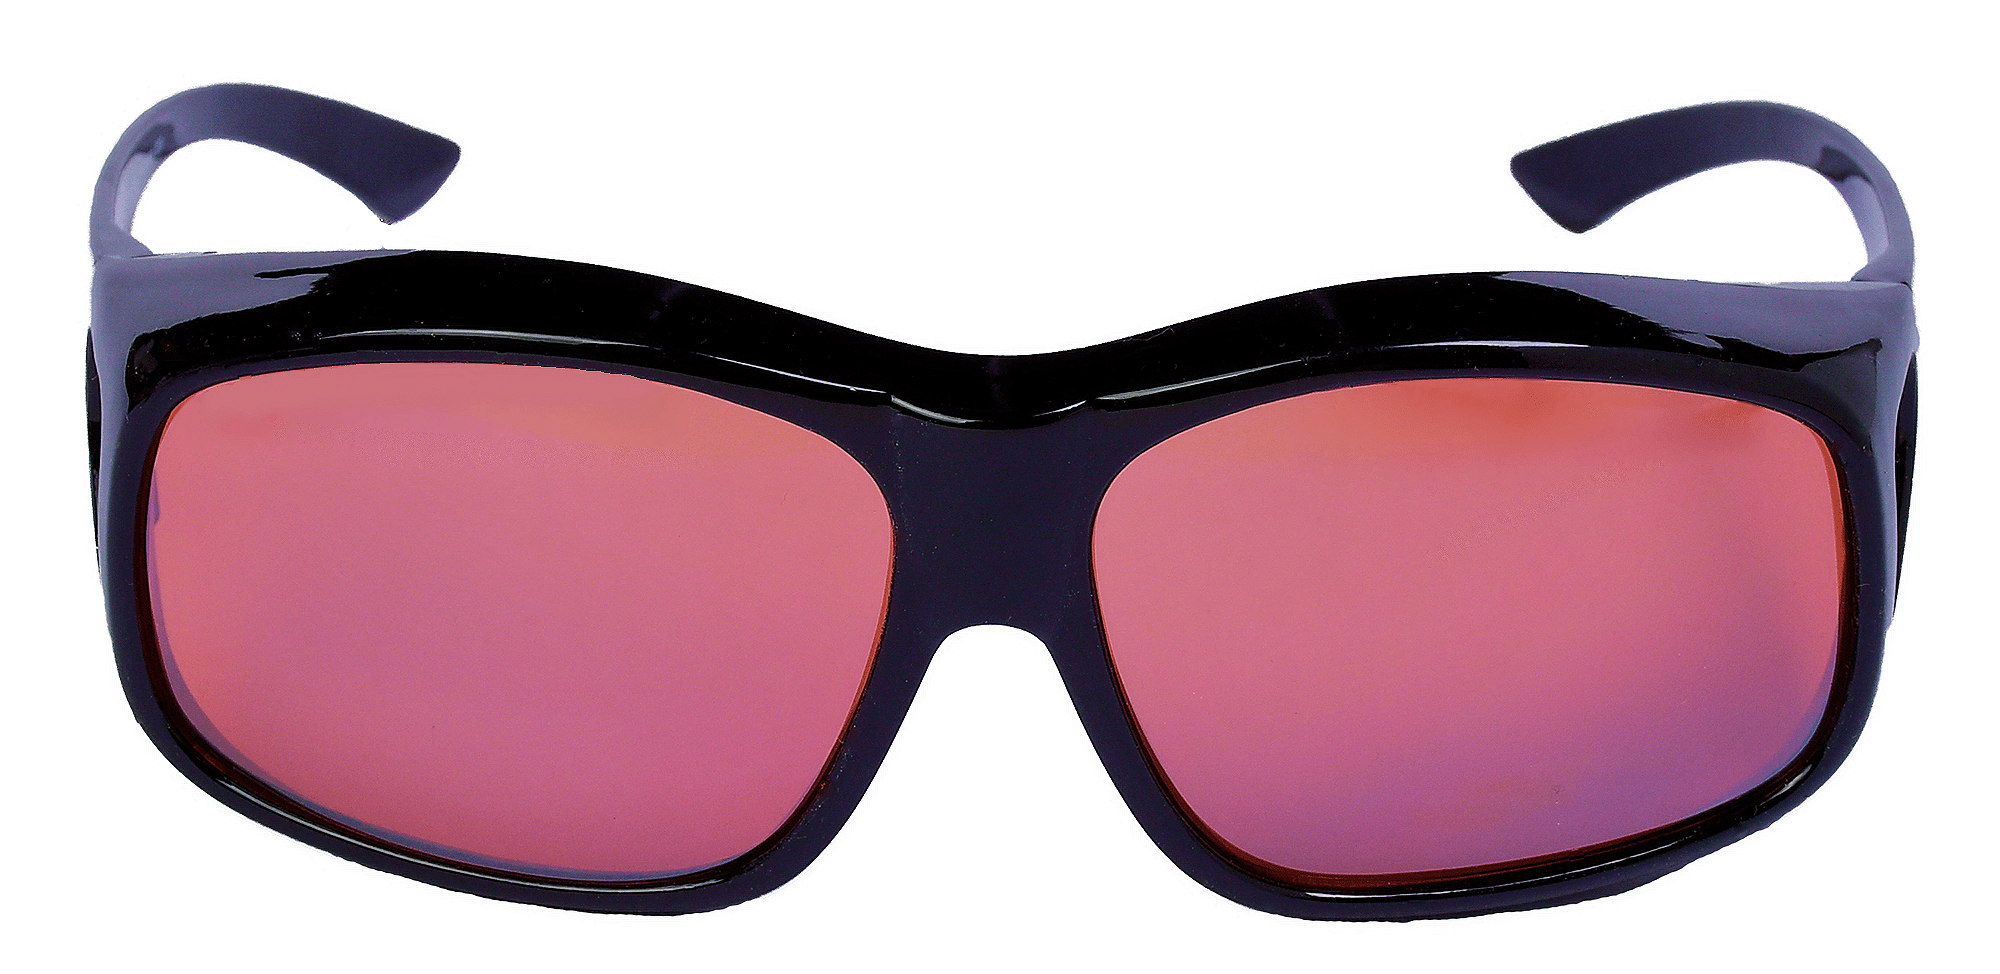 Fashion Oversized Fits Over Sunglasses Polarized Mirrored Lens for Women Men Goggles Go over Prescription Glasses Wraparound Shield Cateye 